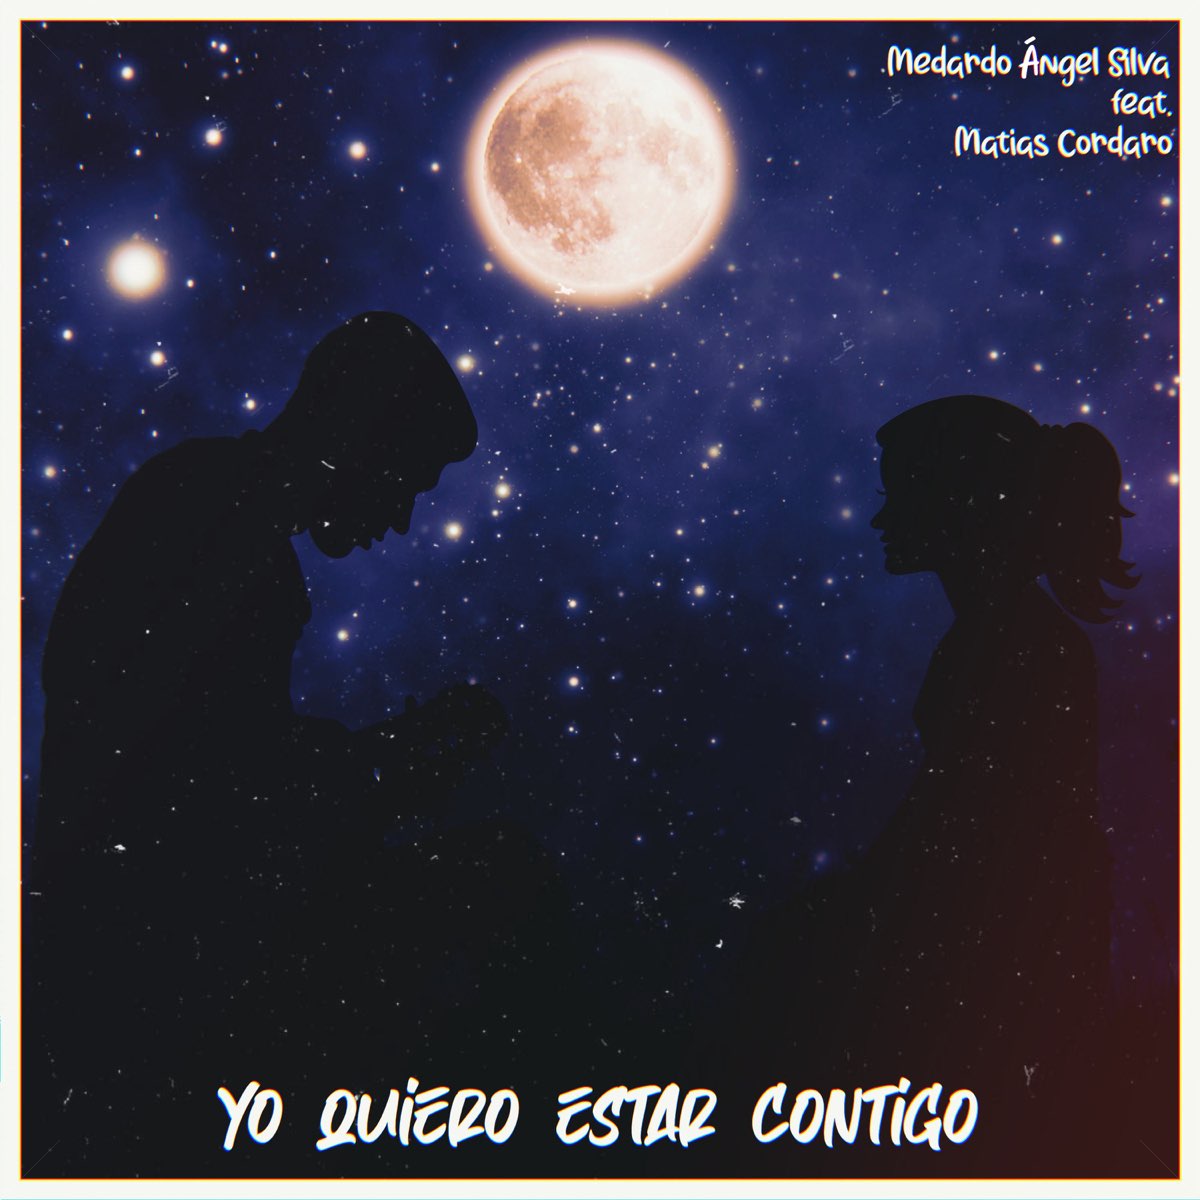 Yo quiero estar contigo (feat. Mati Cordaro) - Single par Medardo Angel  Silva sur Apple Music